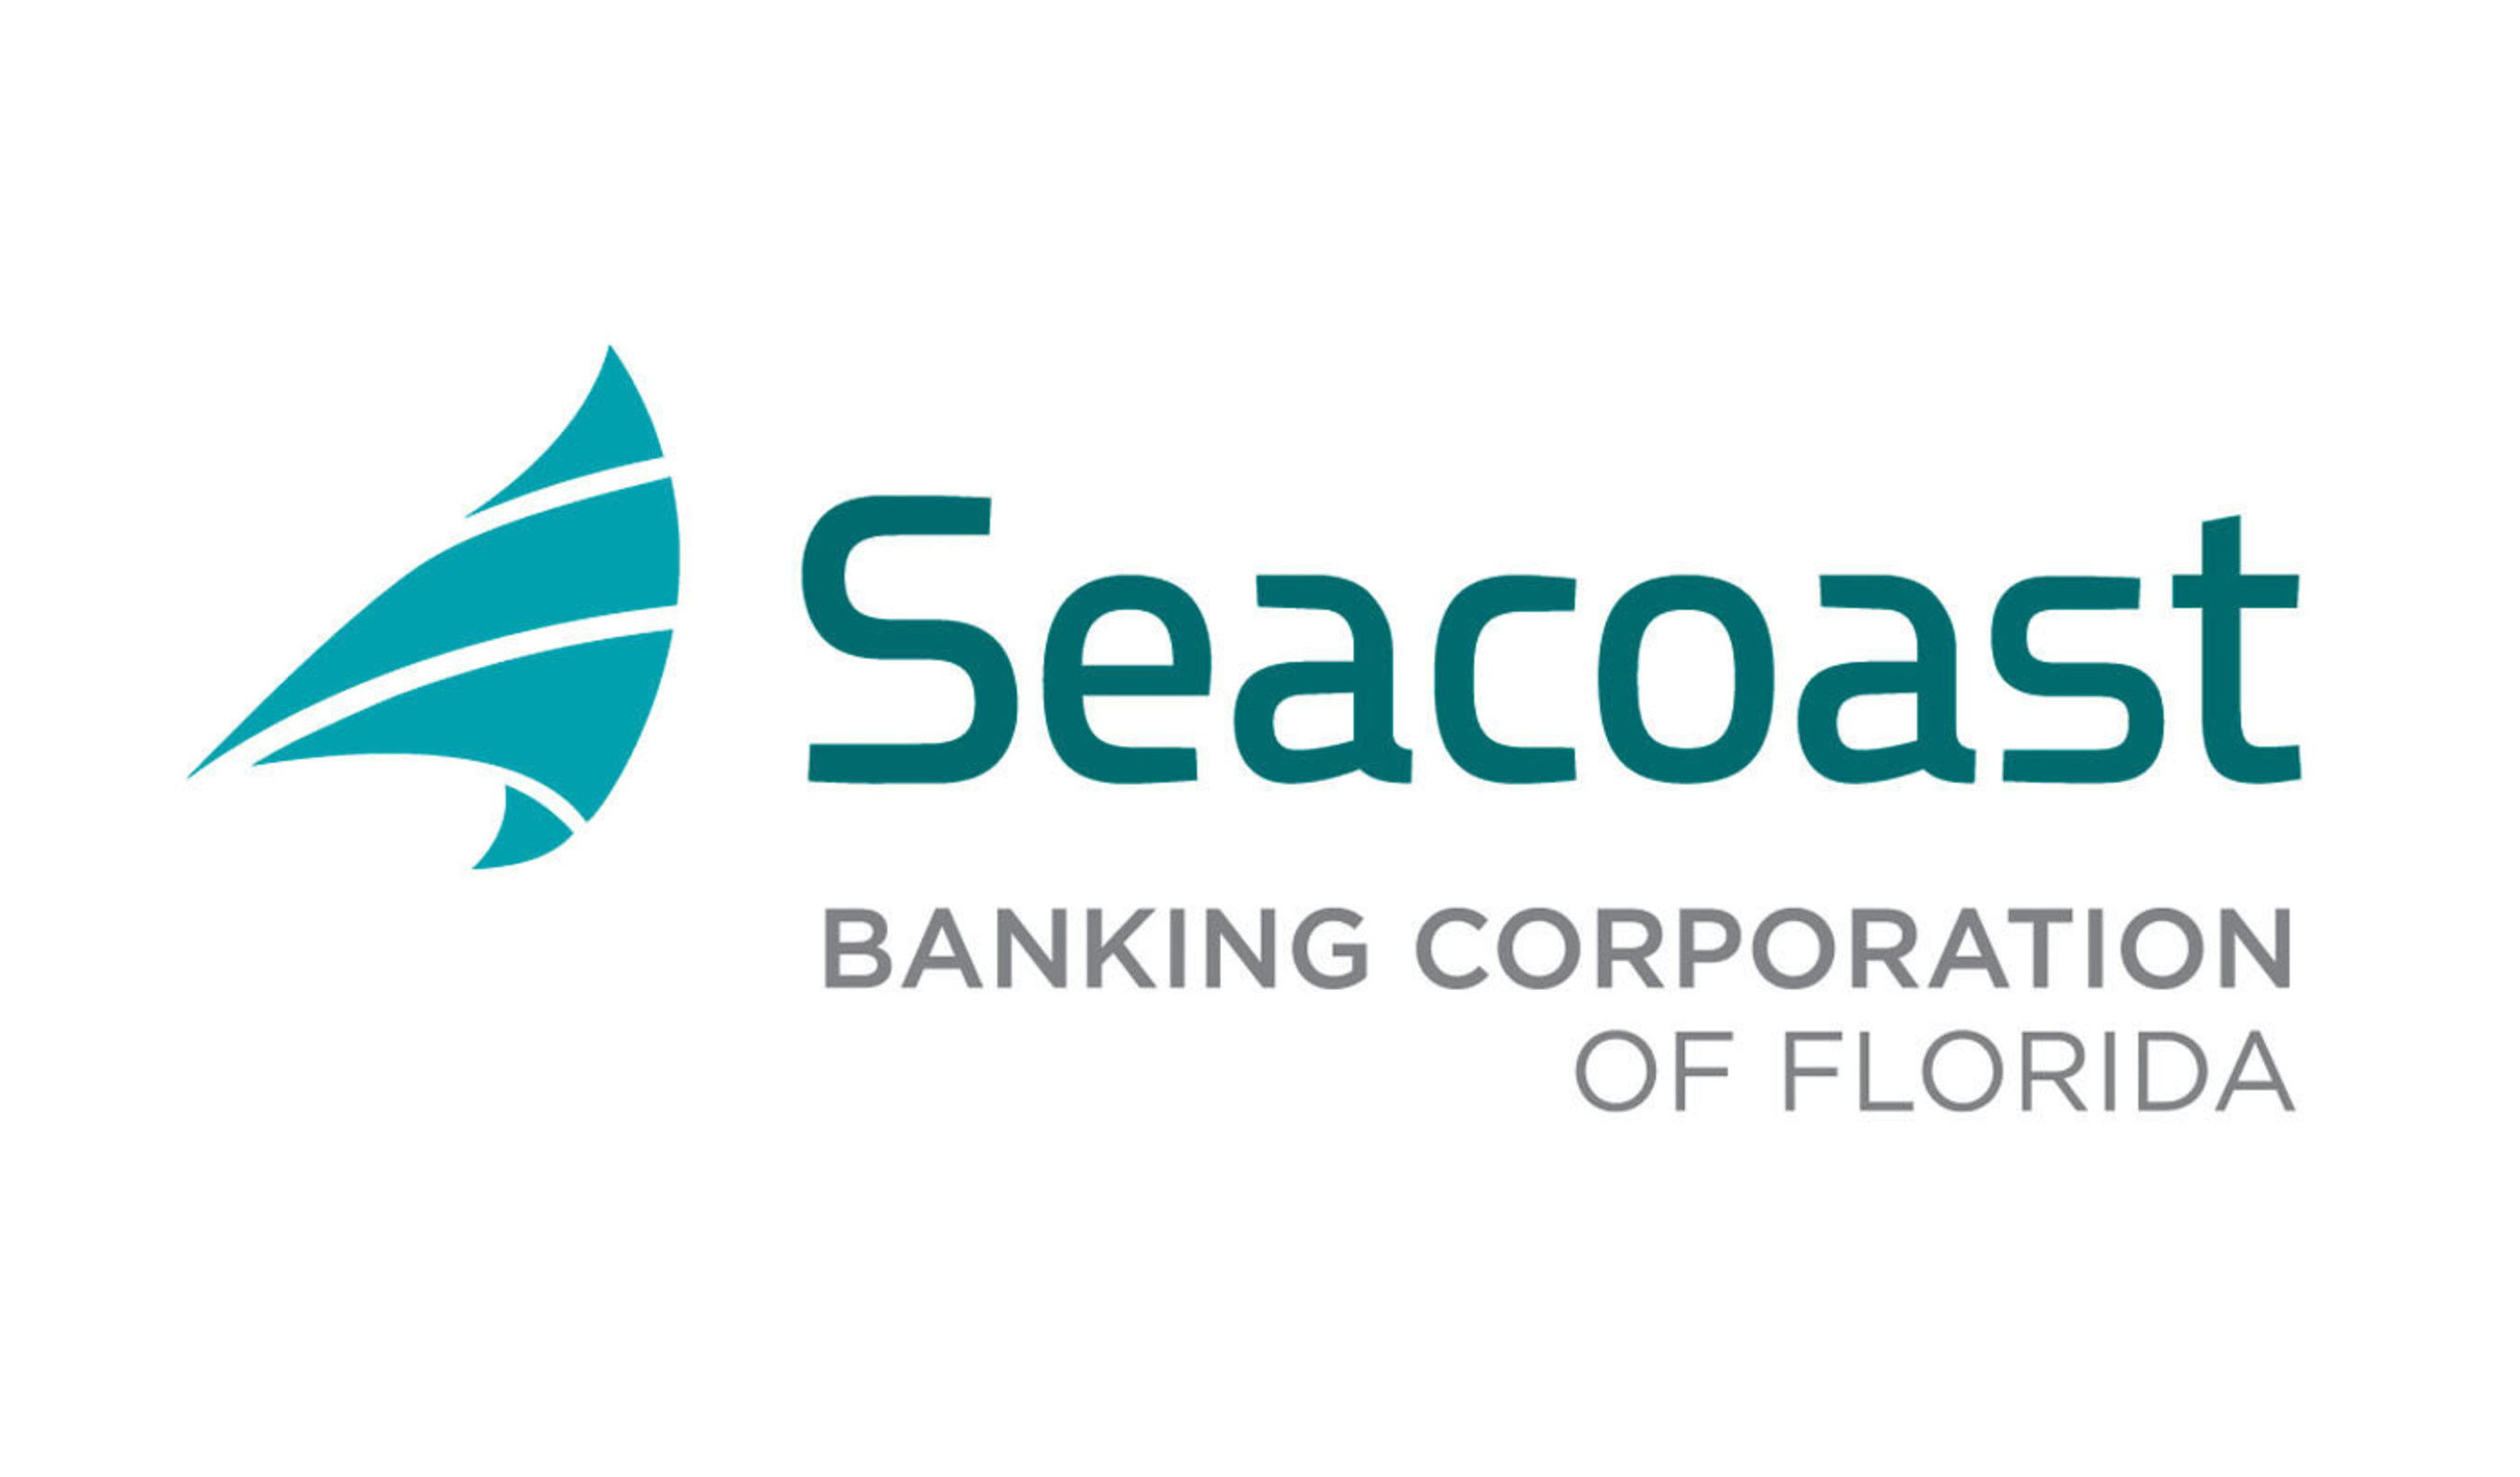 Seacoast Banking Corporation of Florida